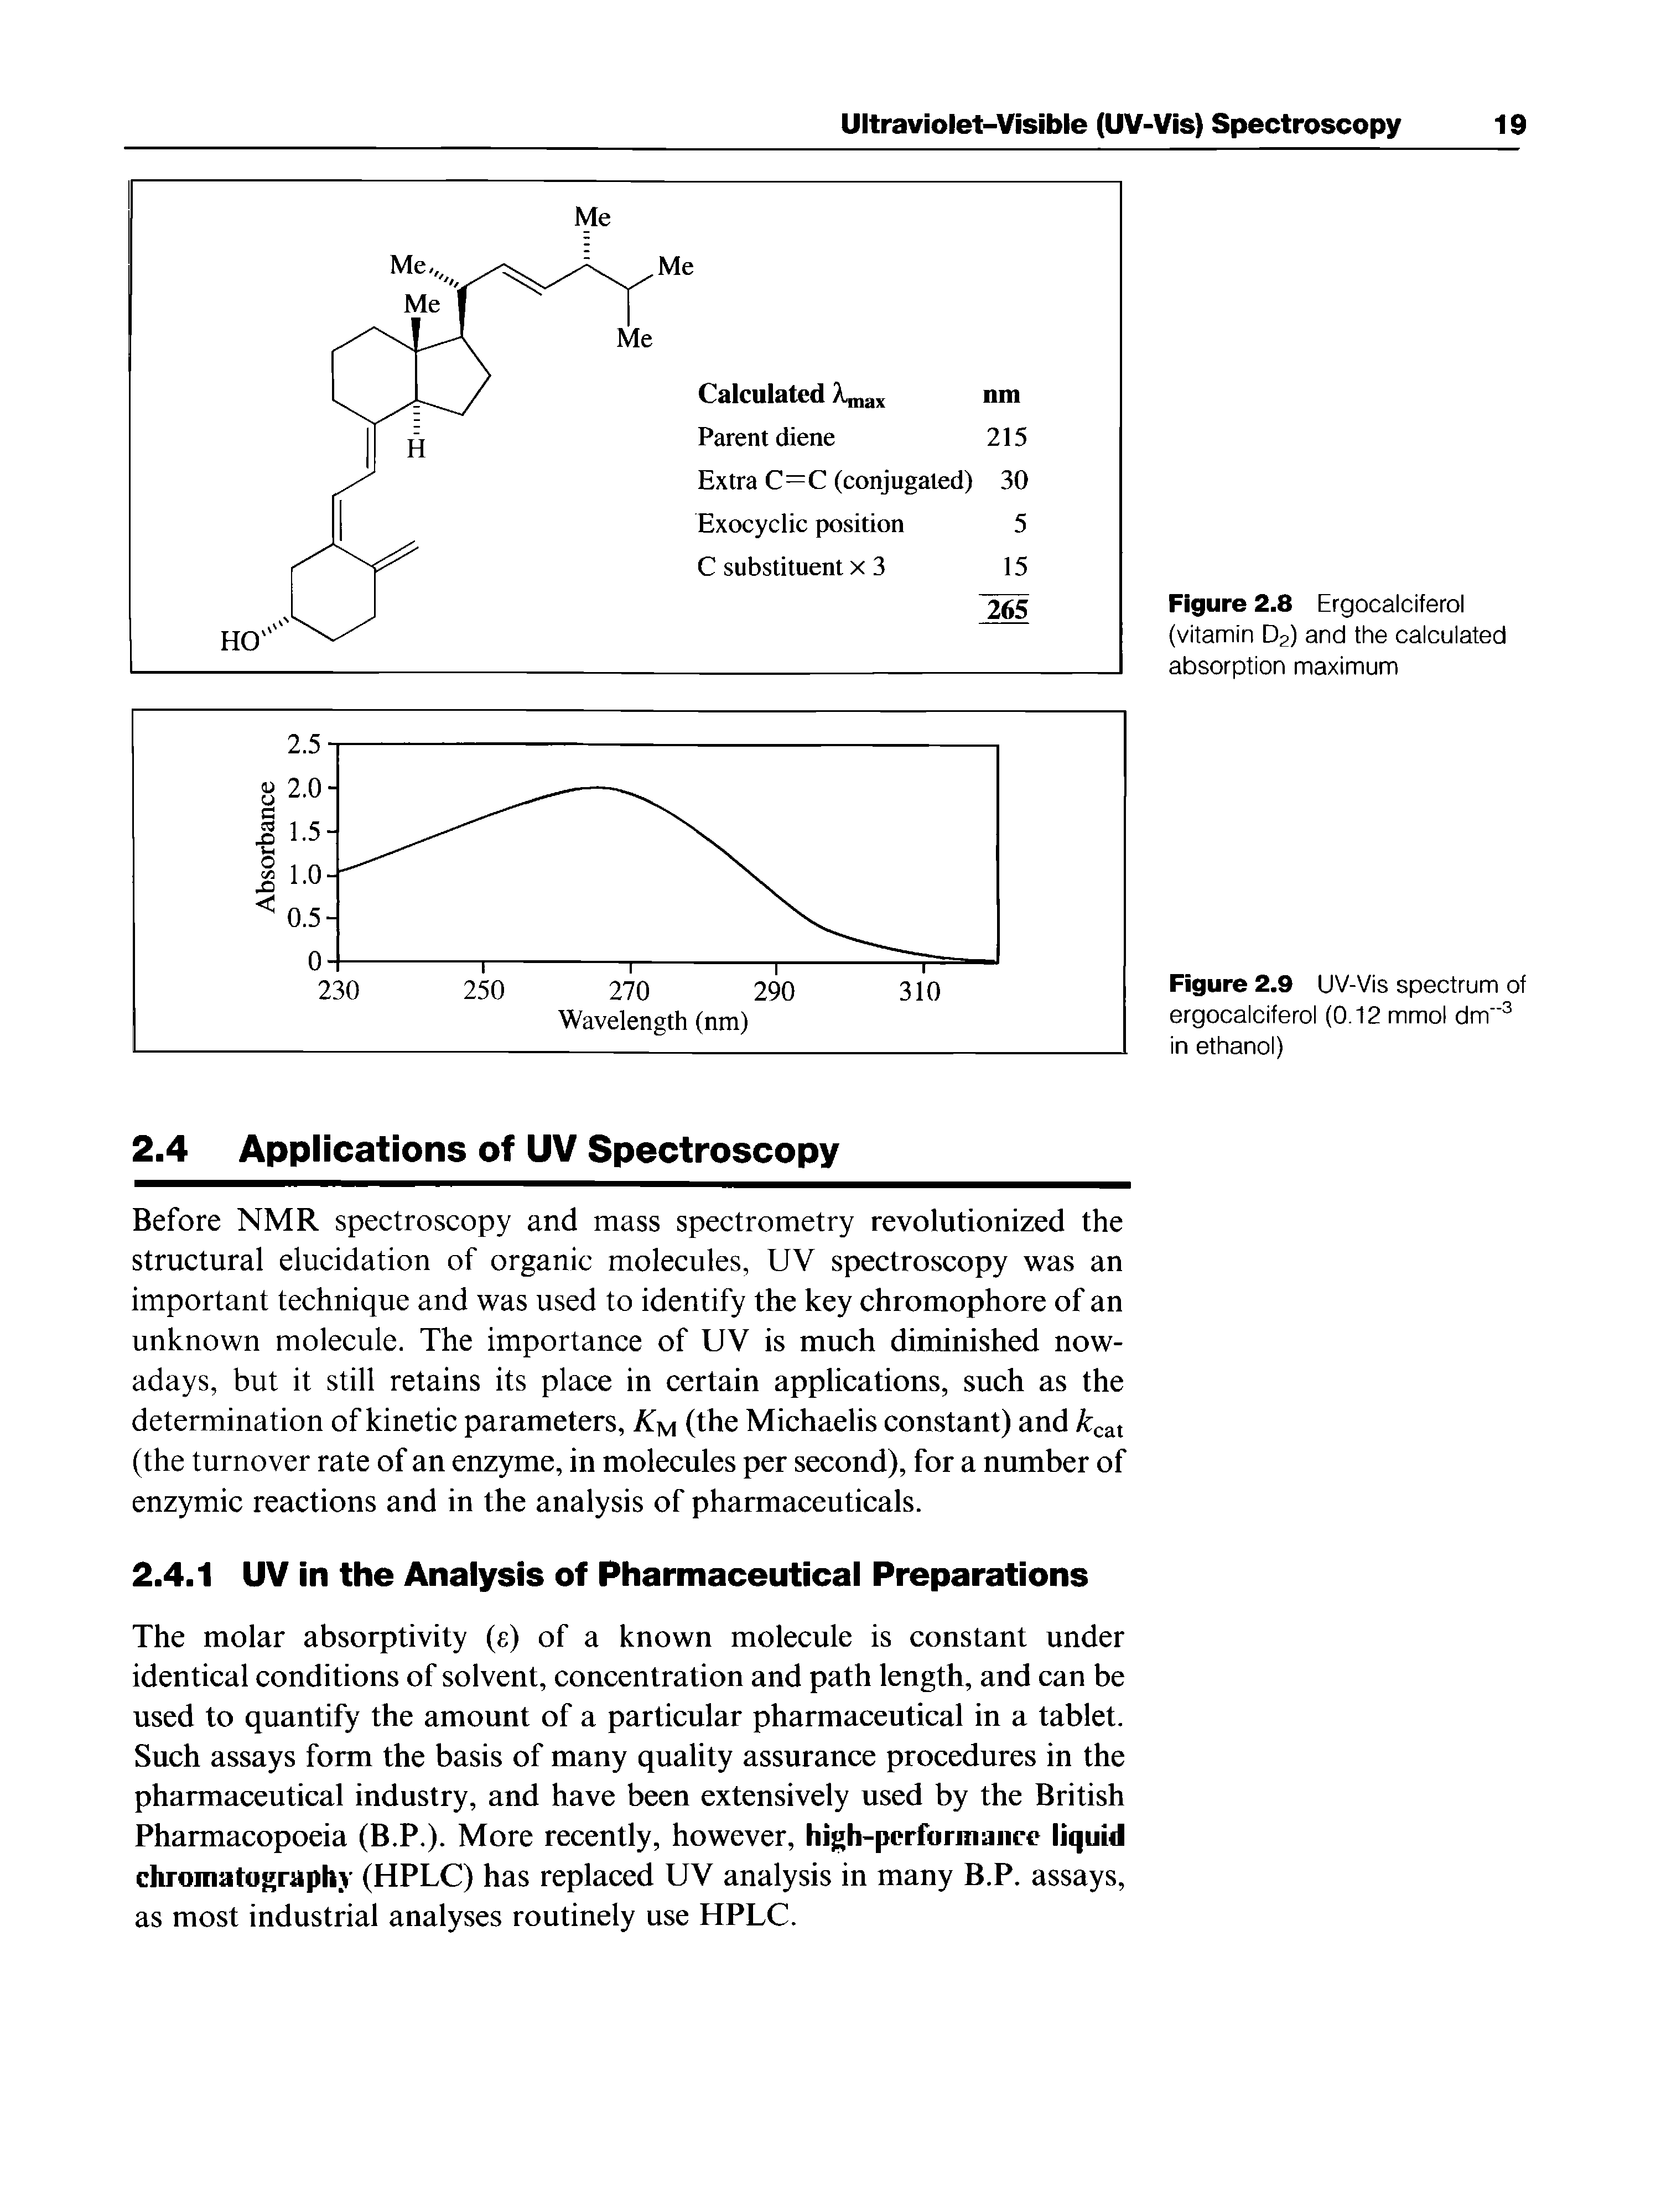 Figure 2.8 Ergocalciferol (vitamin D2) and the calculated absorption maximum...